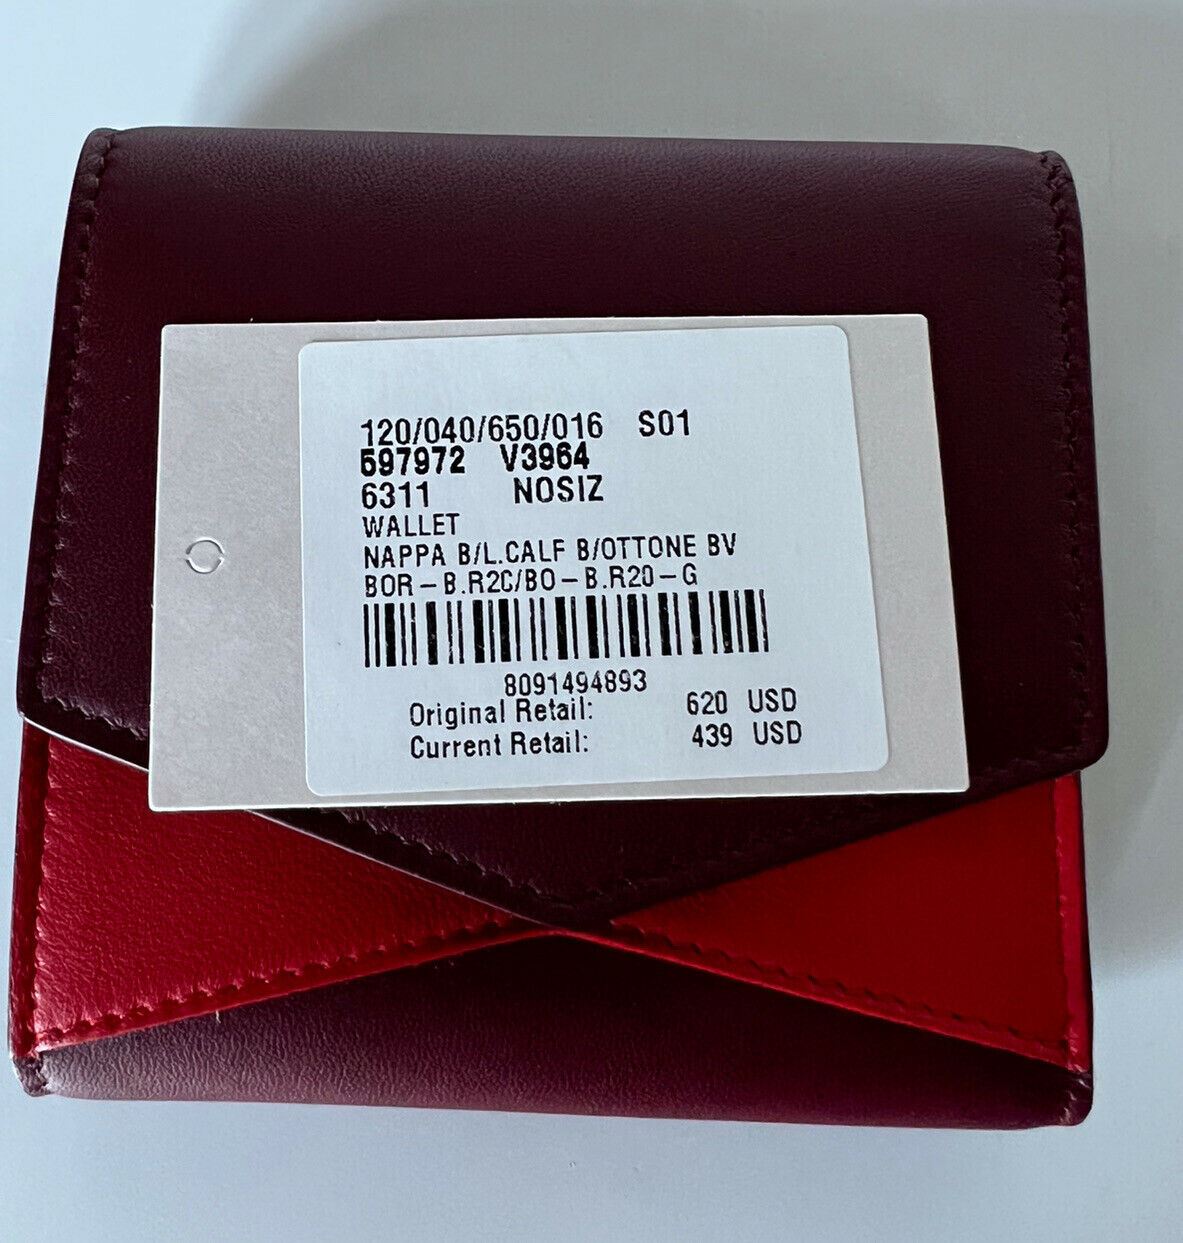 NWT $620 Кошелек Bottega Veneta из кожи наппа бордо, ярко-красный 597972 Италия 